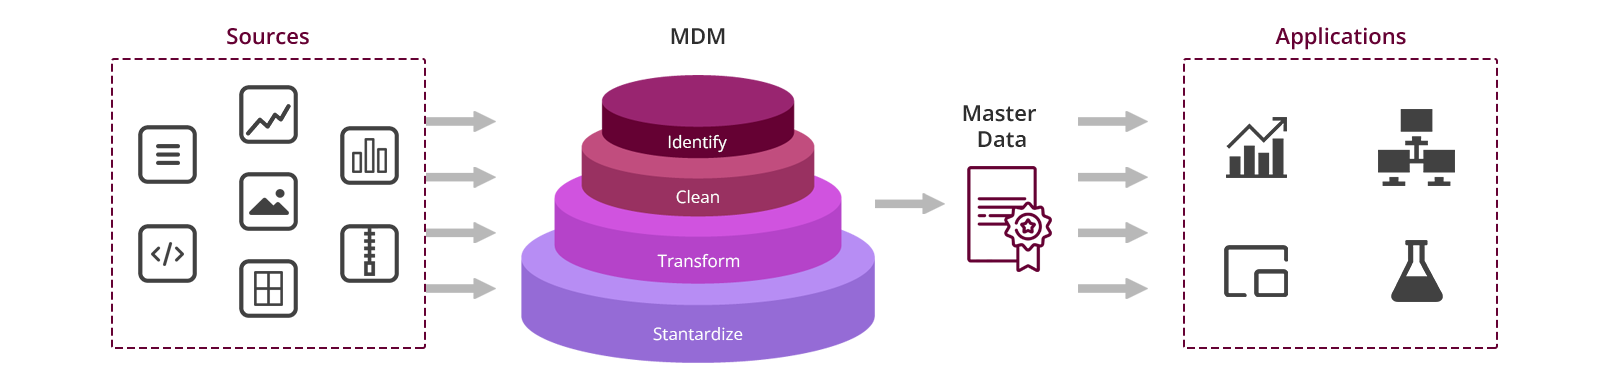 Master Data Management (MDM) and Data Integrity